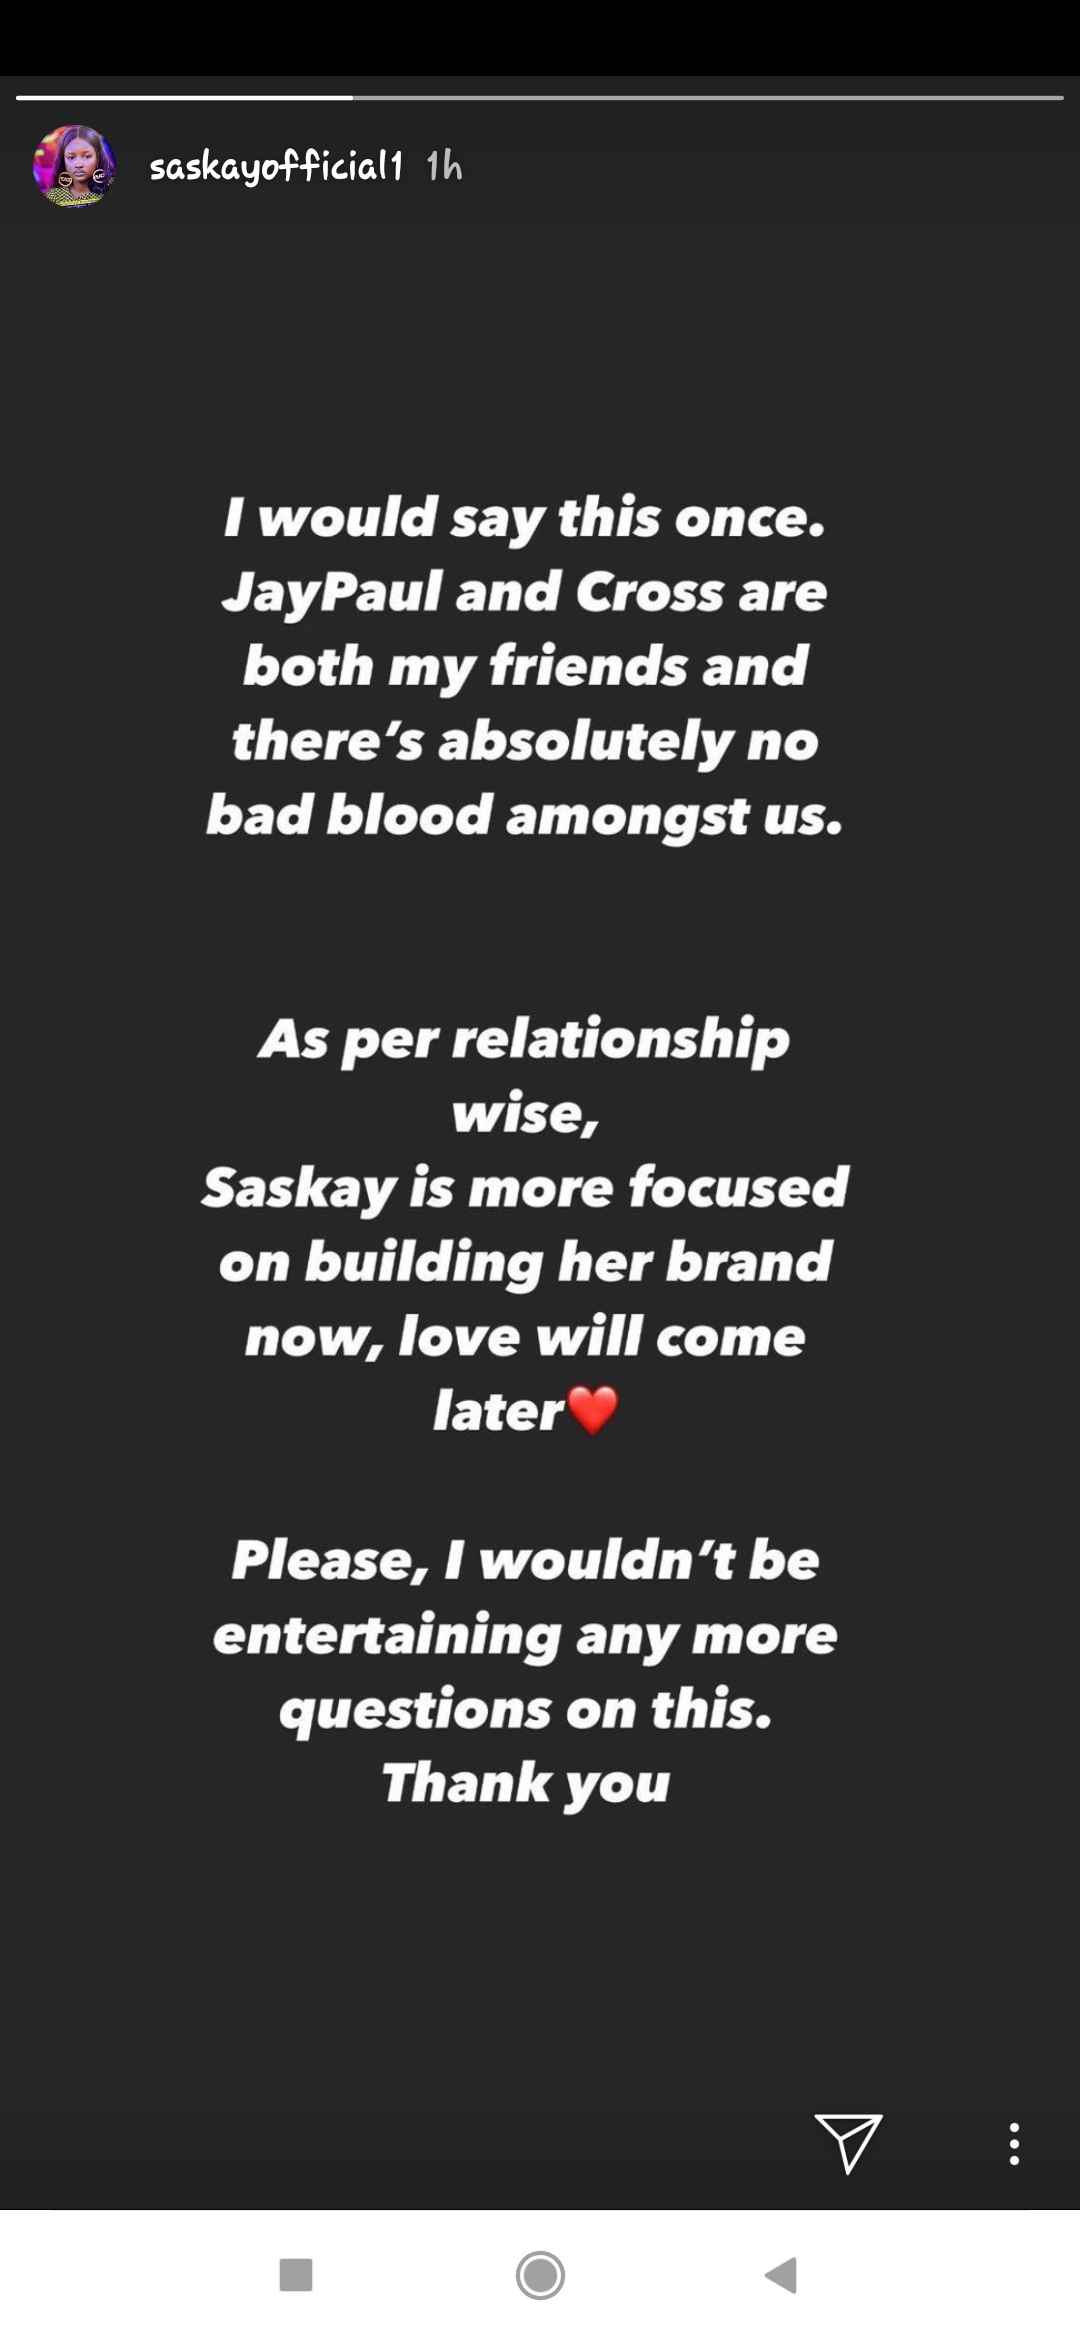 #BBNaija: Saskay debunk rumours of crisis in her relationship with Cross and Jaypaul